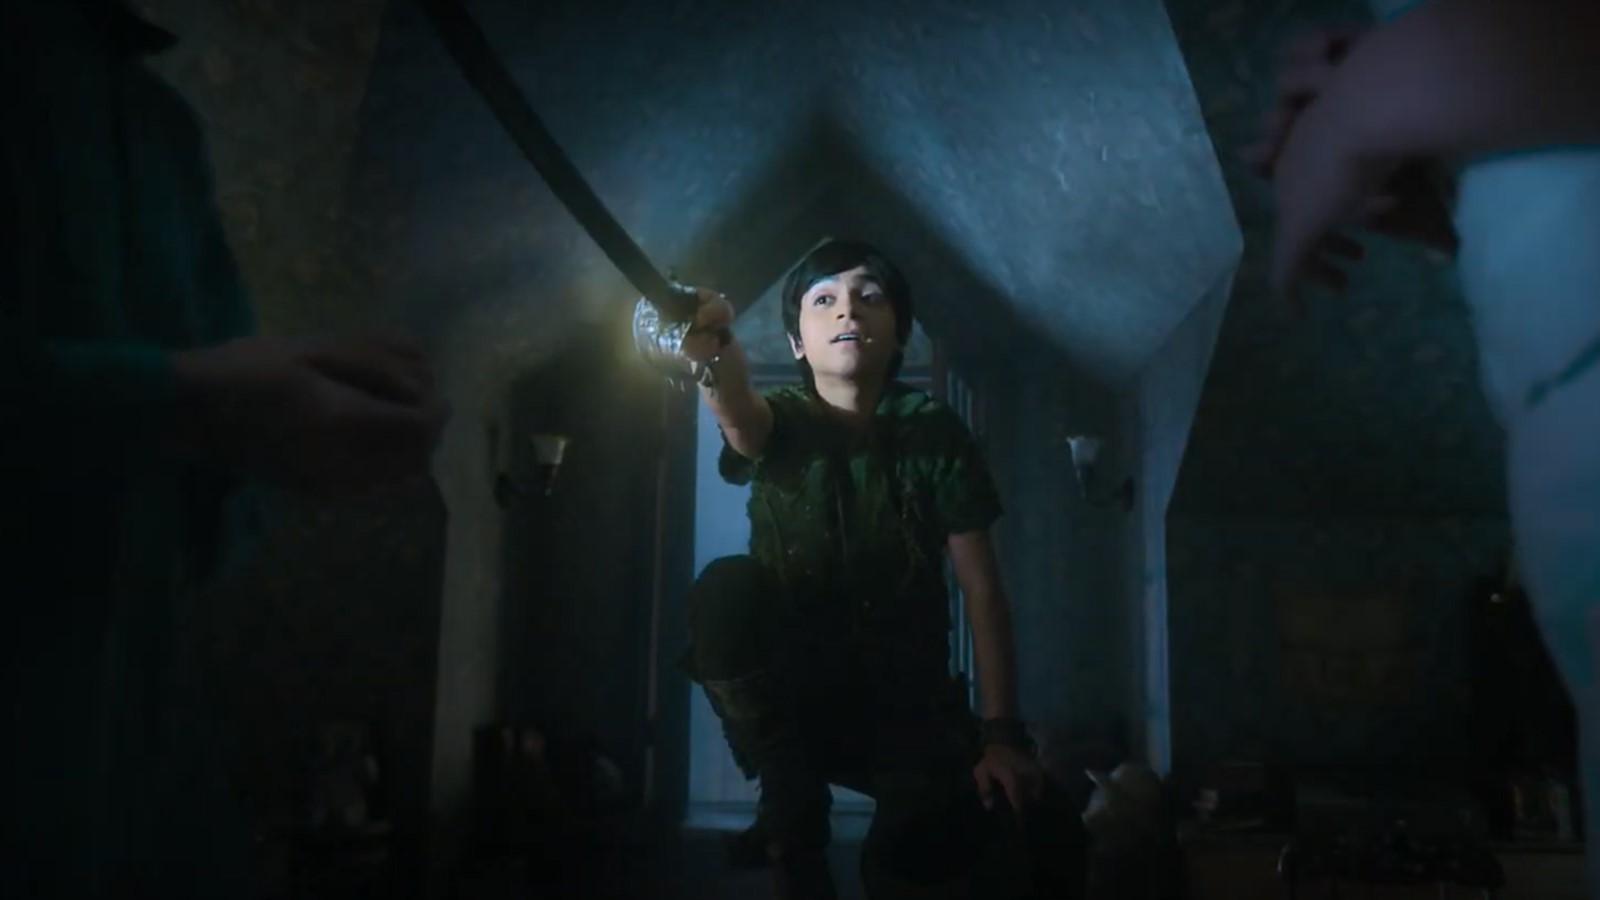 Peter Pan & Wendy: un duello con Capitan Uncino nel nuovo trailer del film live-action